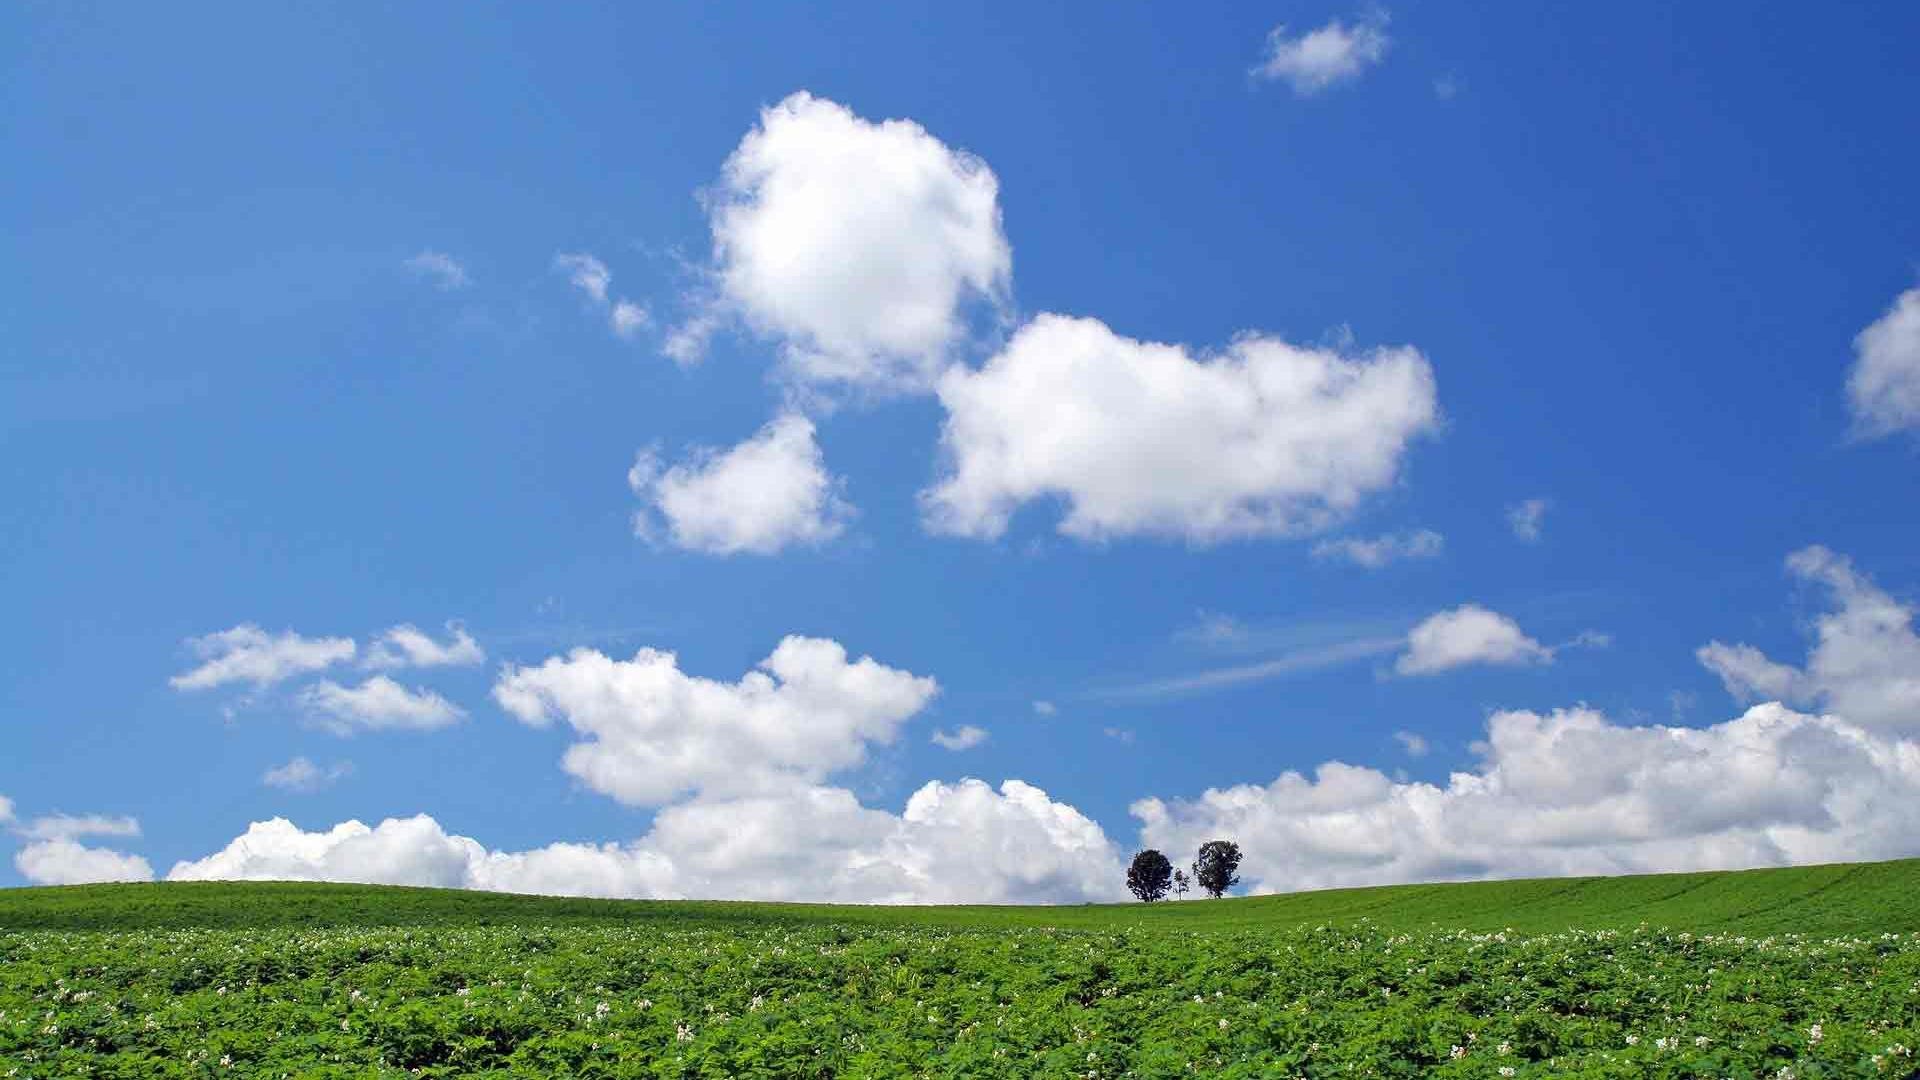 1920x10801440x9001280x800 Â· Hd white clouds in the blue sky scenic desktop  backgrounds